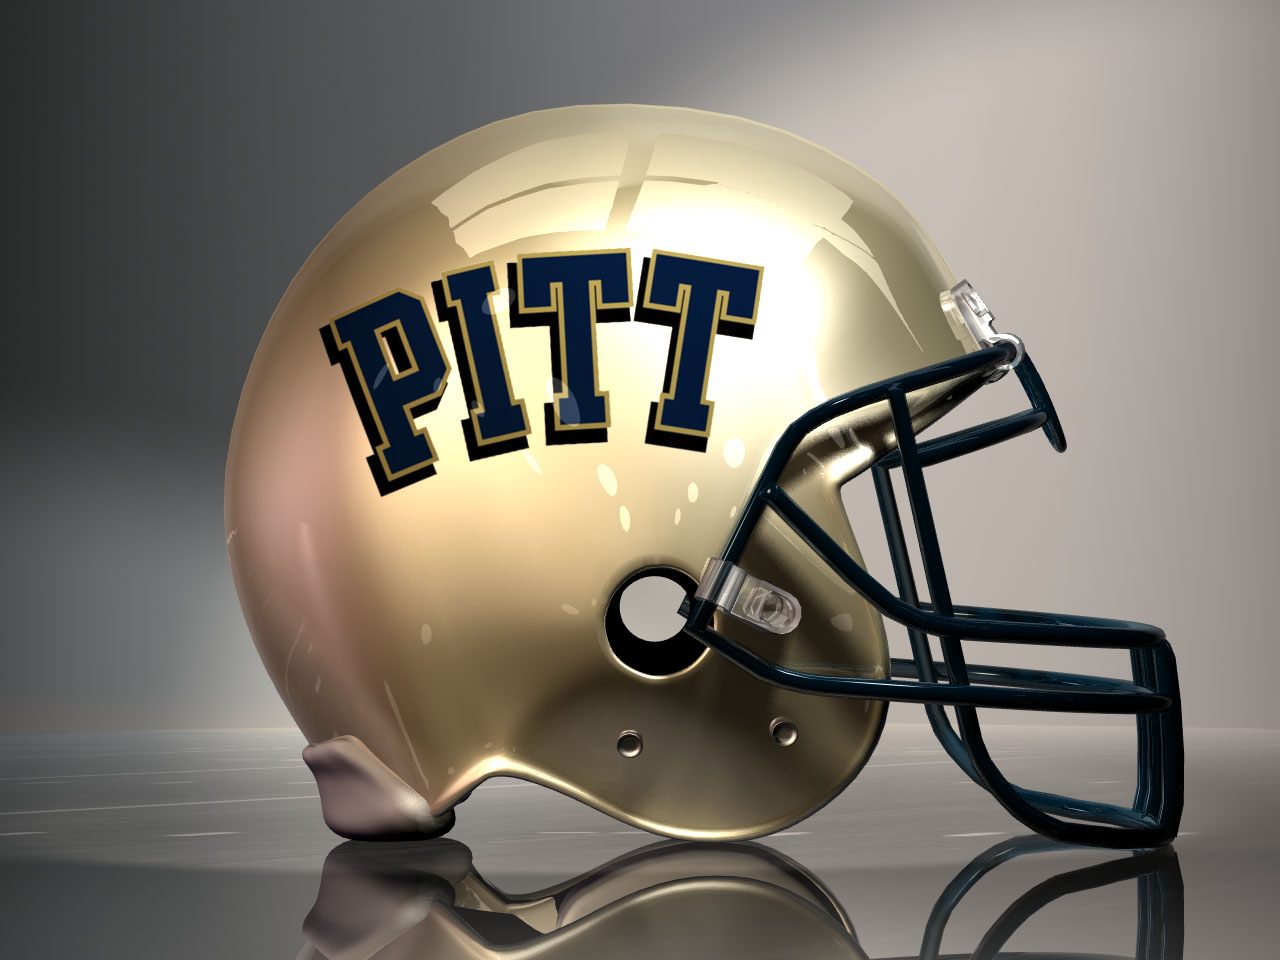 Pitt-Panthers-football-helmet